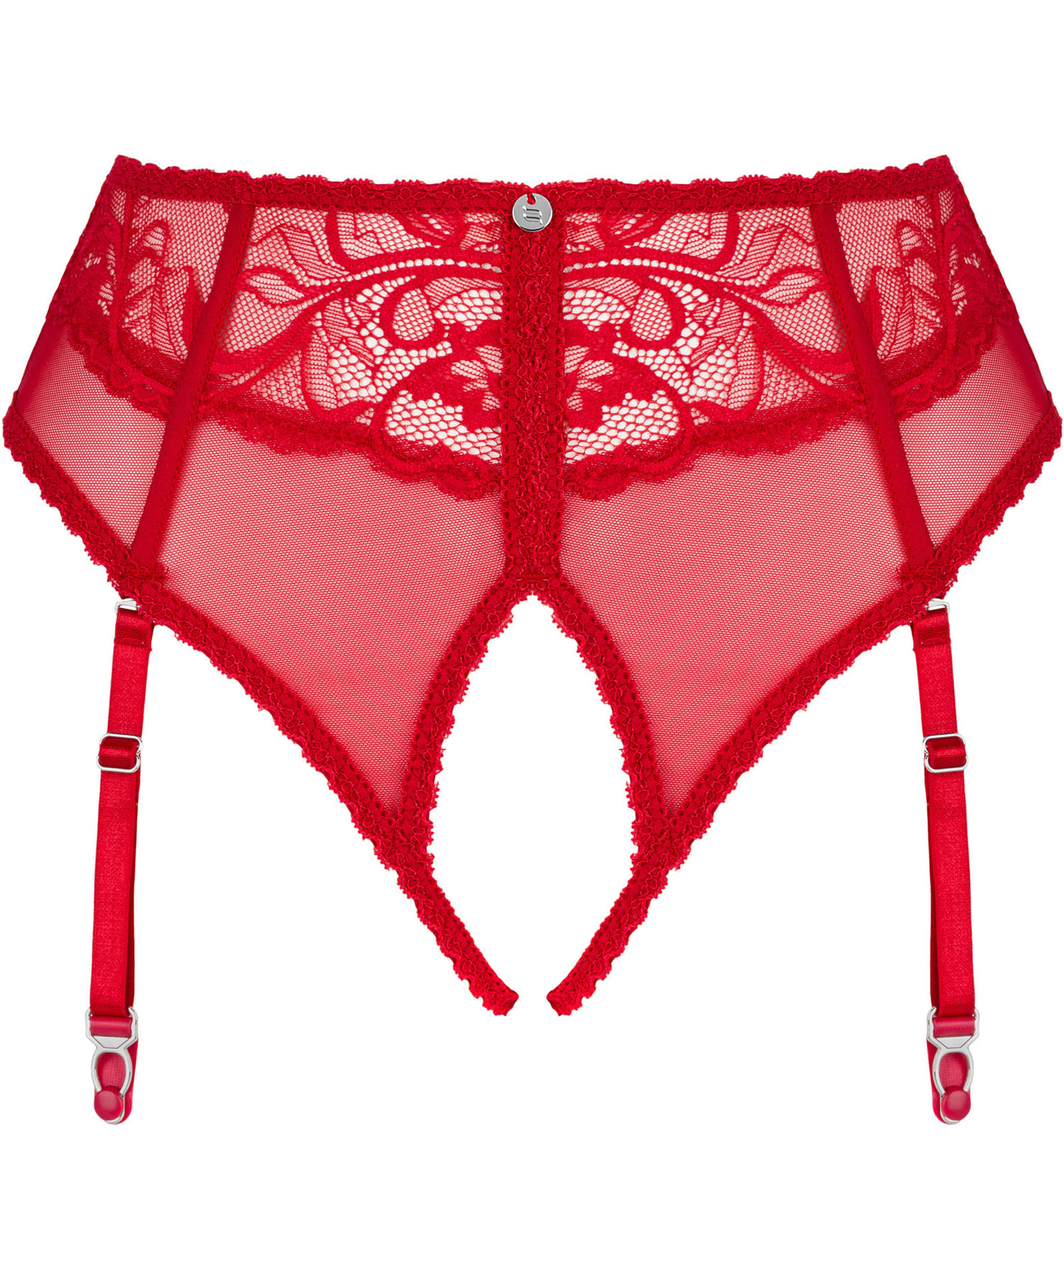 Obsessive Dagmarie red crotchless garter panties